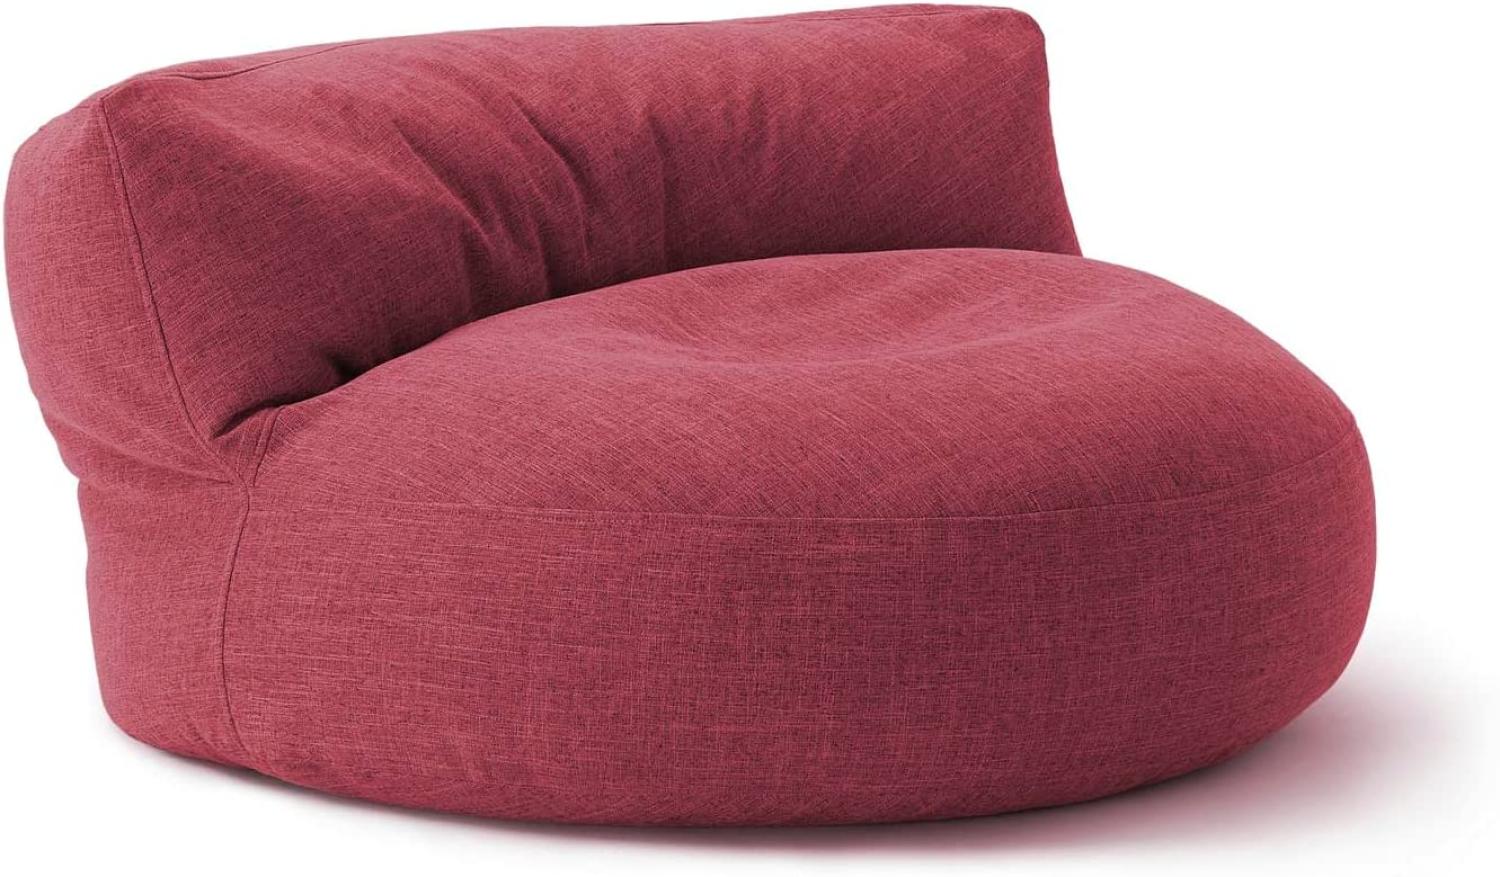 Lumaland Interior Line Sitzsack-Lounge, Rundes Sitzsack-Sofa für drinnen, 320l Füllung, 90 x 50 cm, Leinen Look and Feel, Rot Bild 1